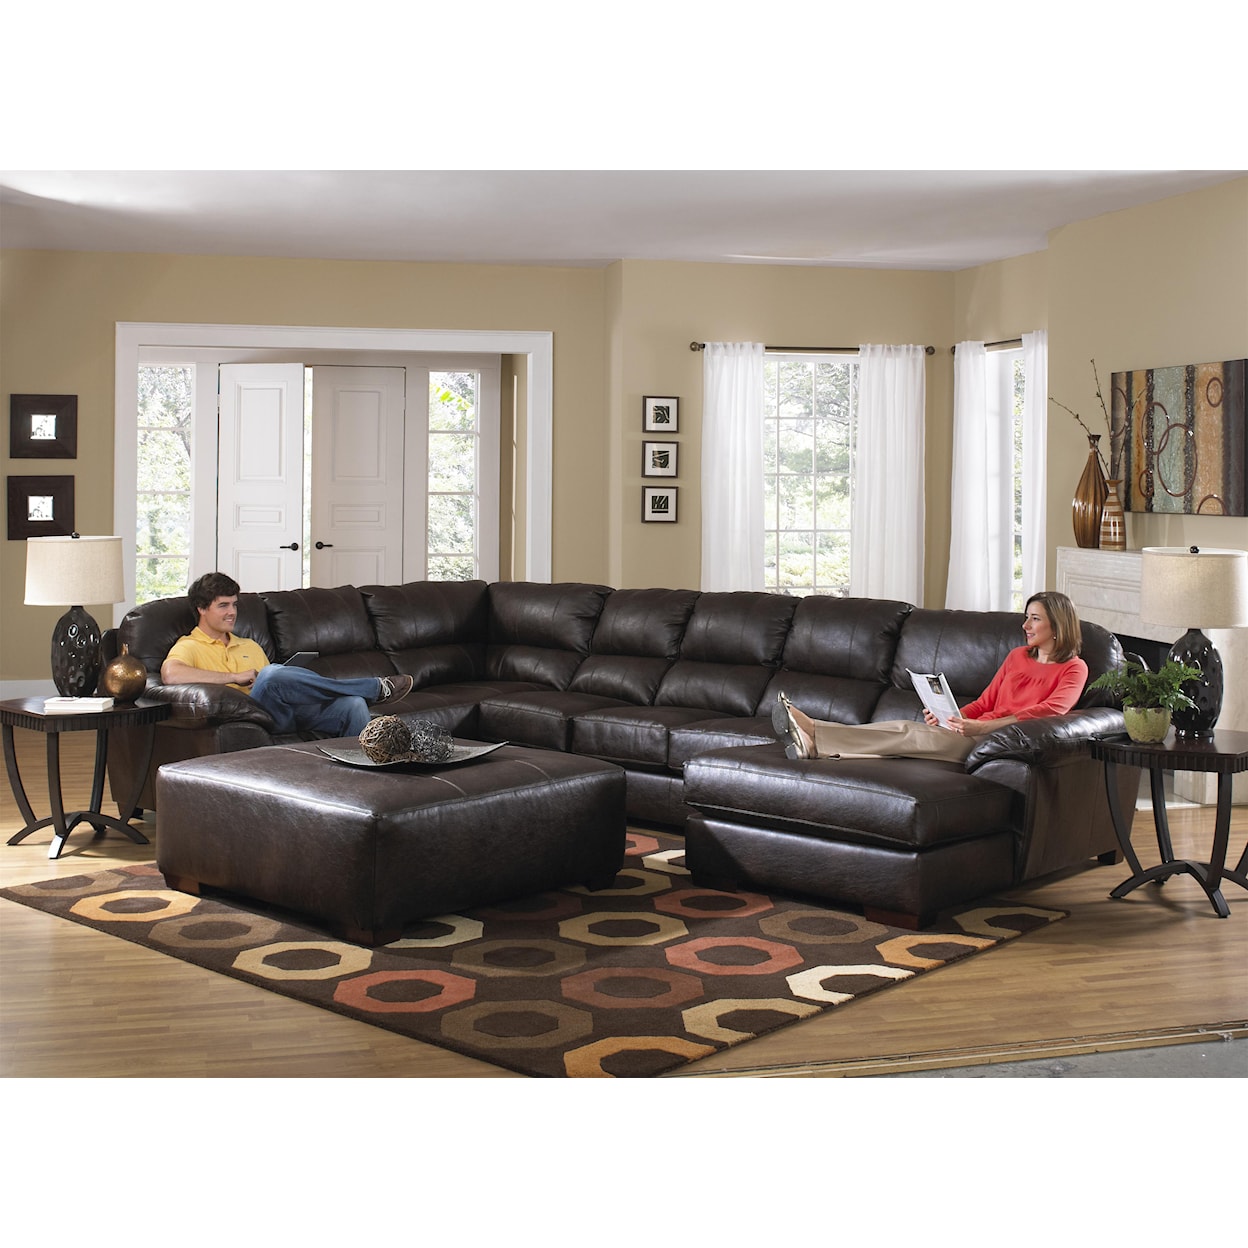 Carolina Furniture 4243 Lawson 3-Piece Sectional